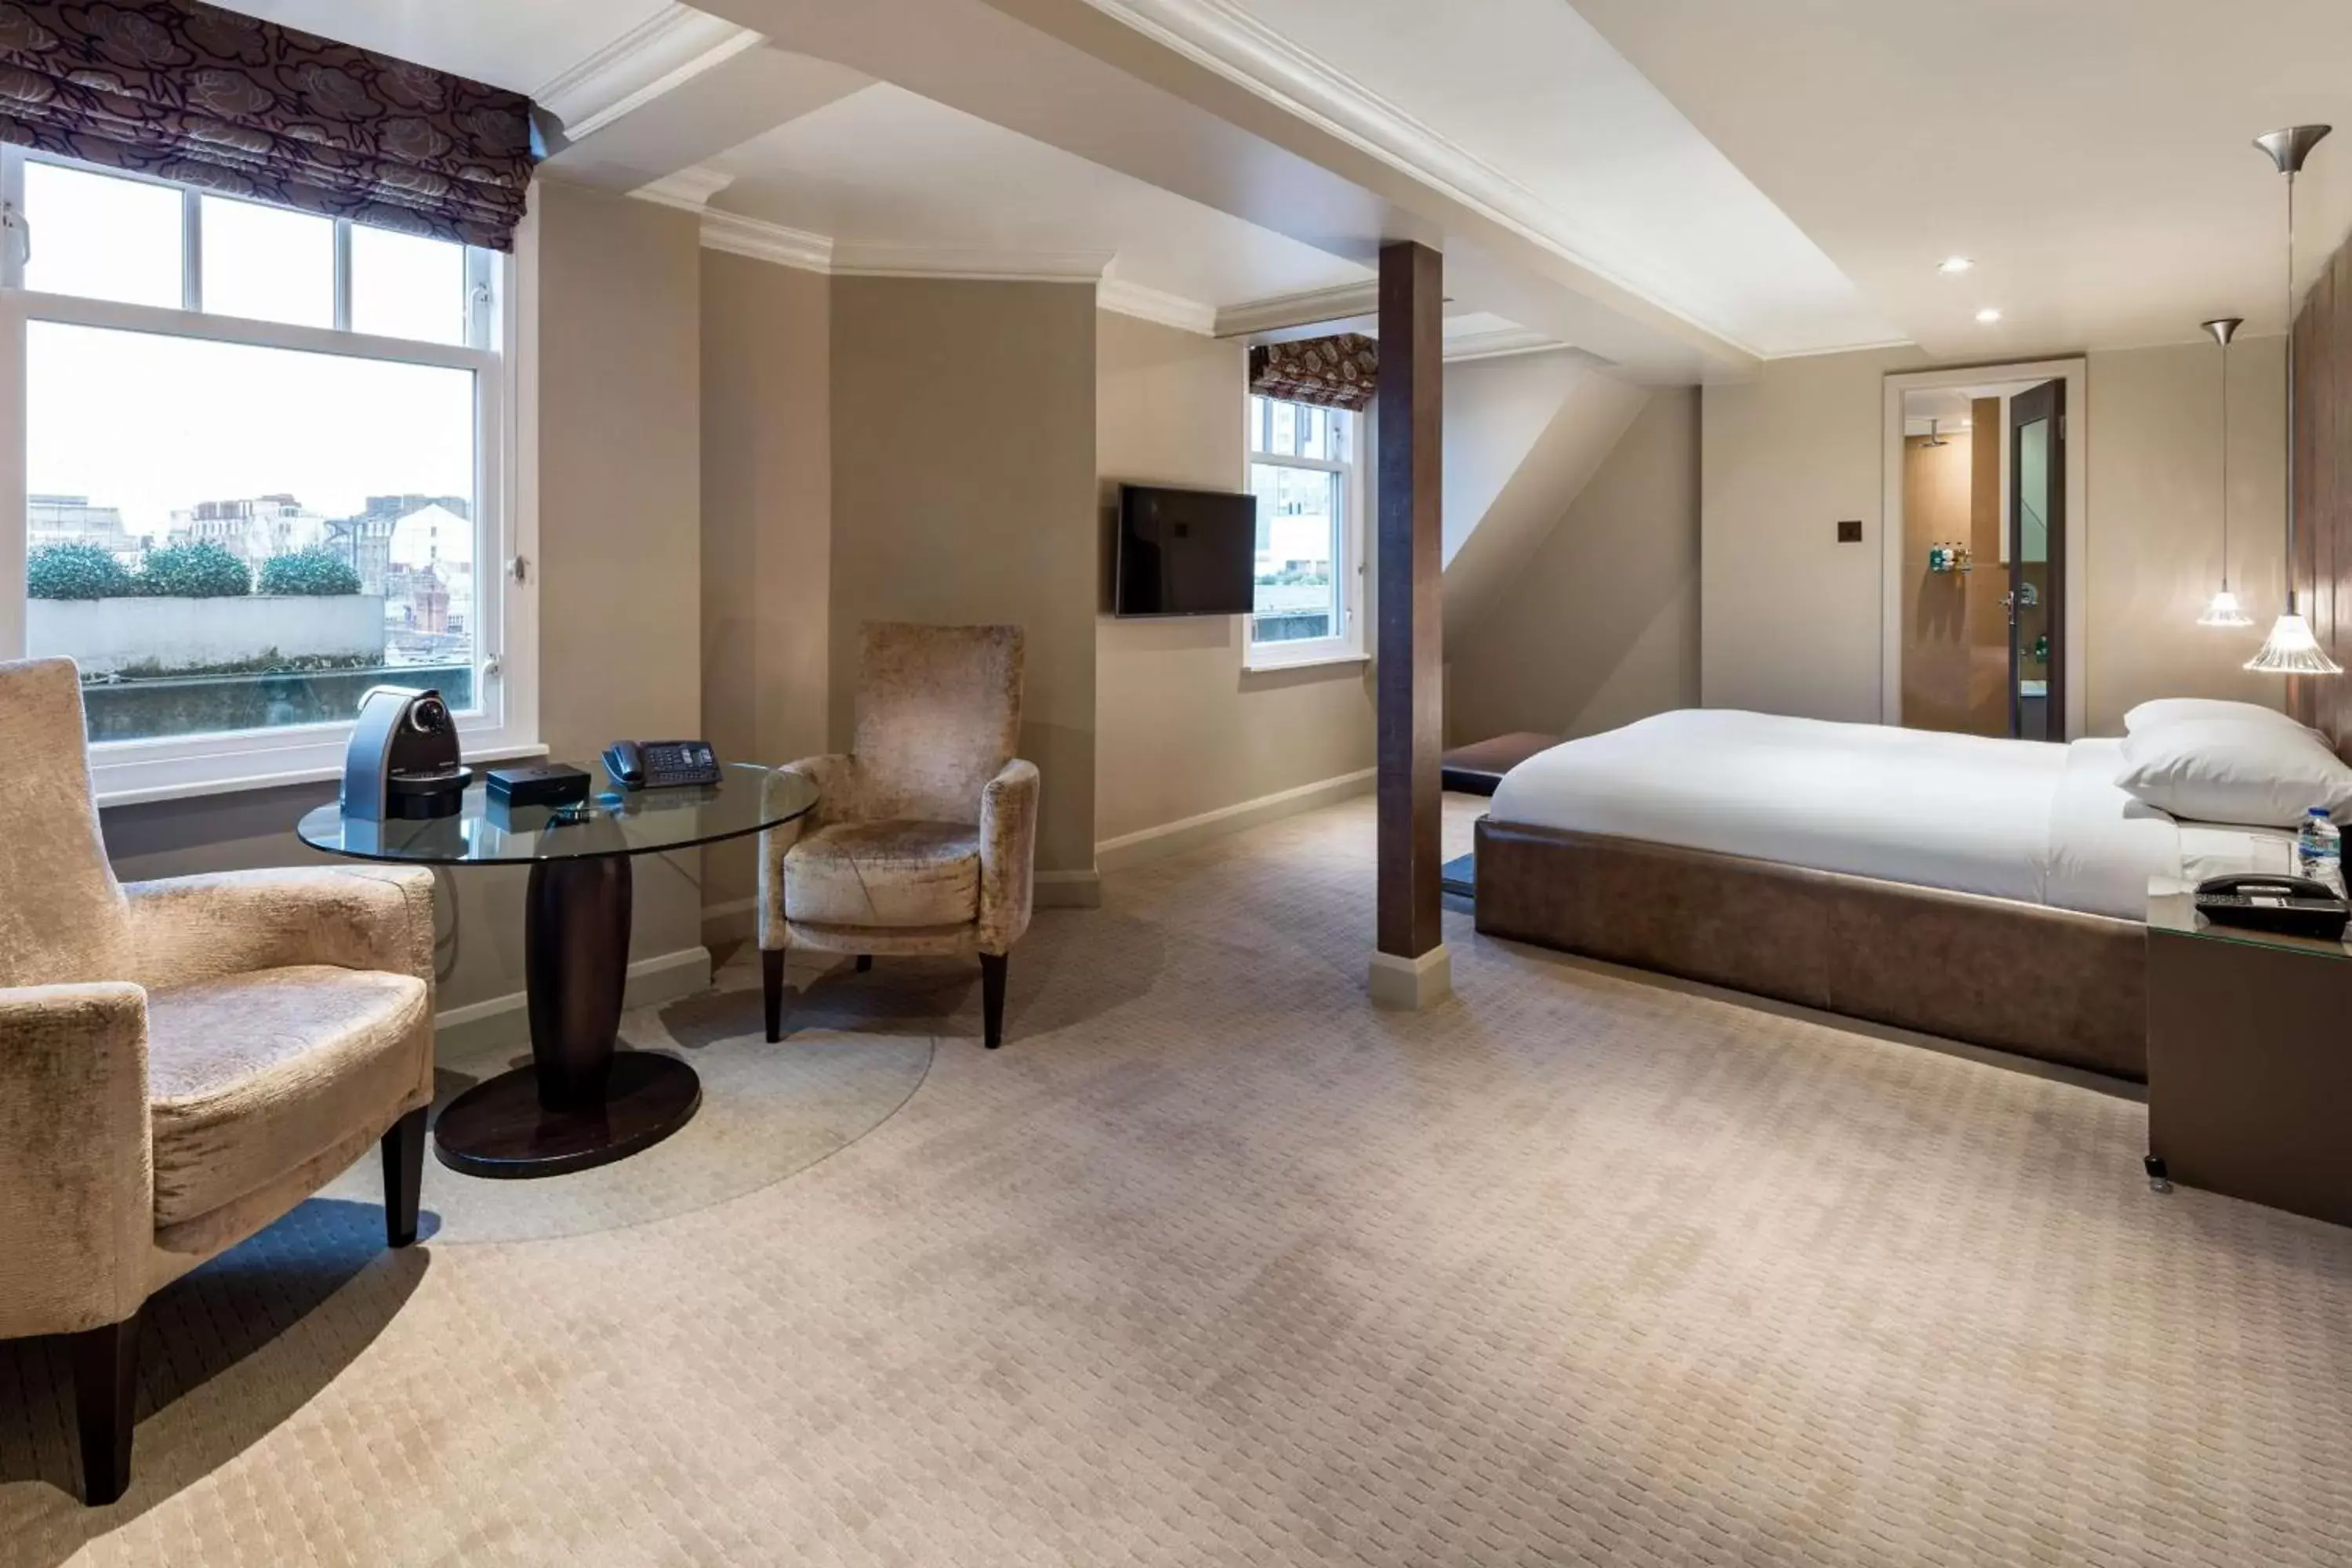 Photo of the whole room in Radisson Blu Edwardian Bloomsbury Street Hotel, London